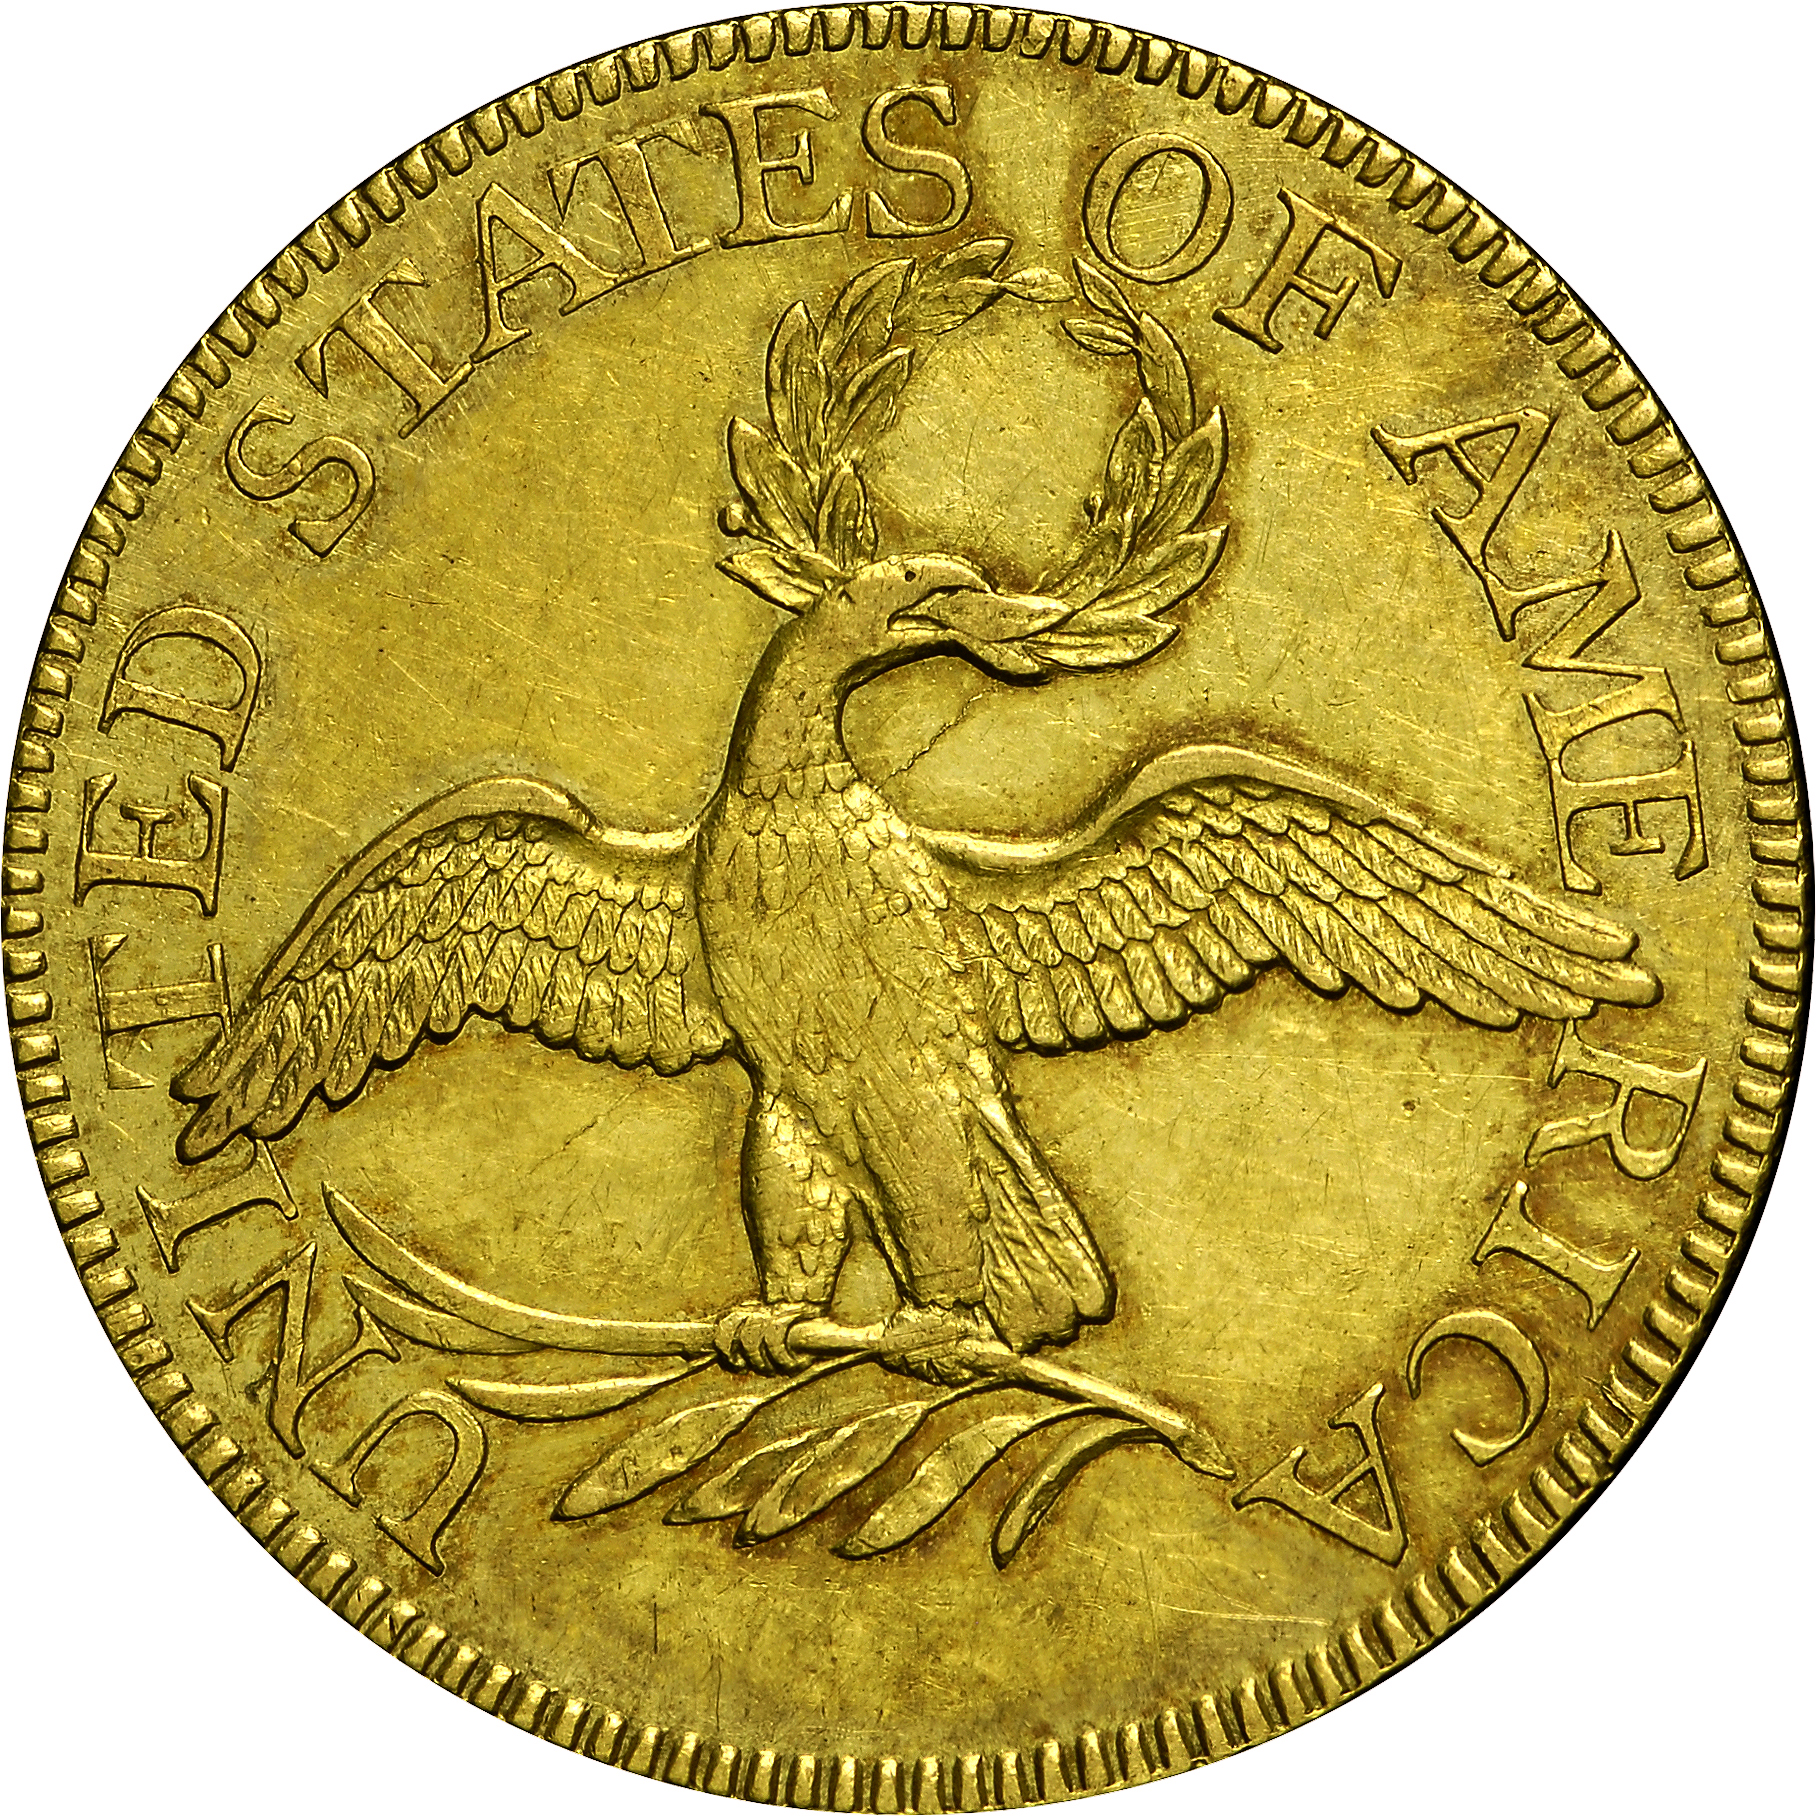 HBCC #3048 – 1797 Half Eagle – Reverse